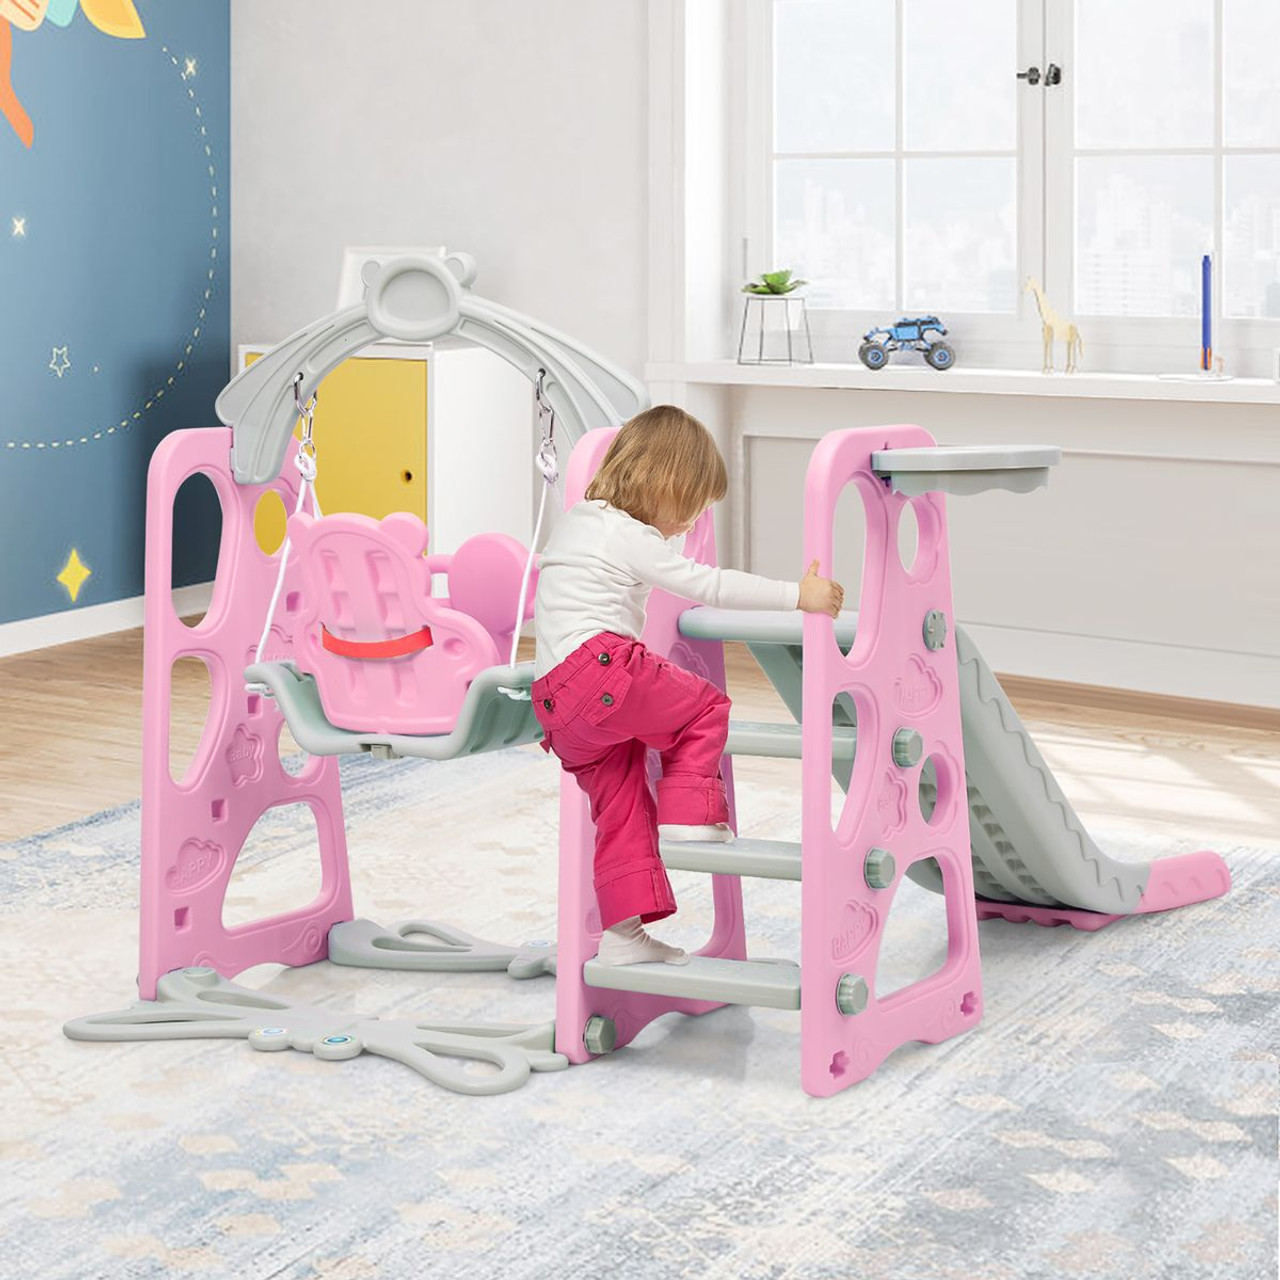 Goplus 4-in-1 Toddler Climber & Swing Set, Basketball Hoop & Ball-Pink product image